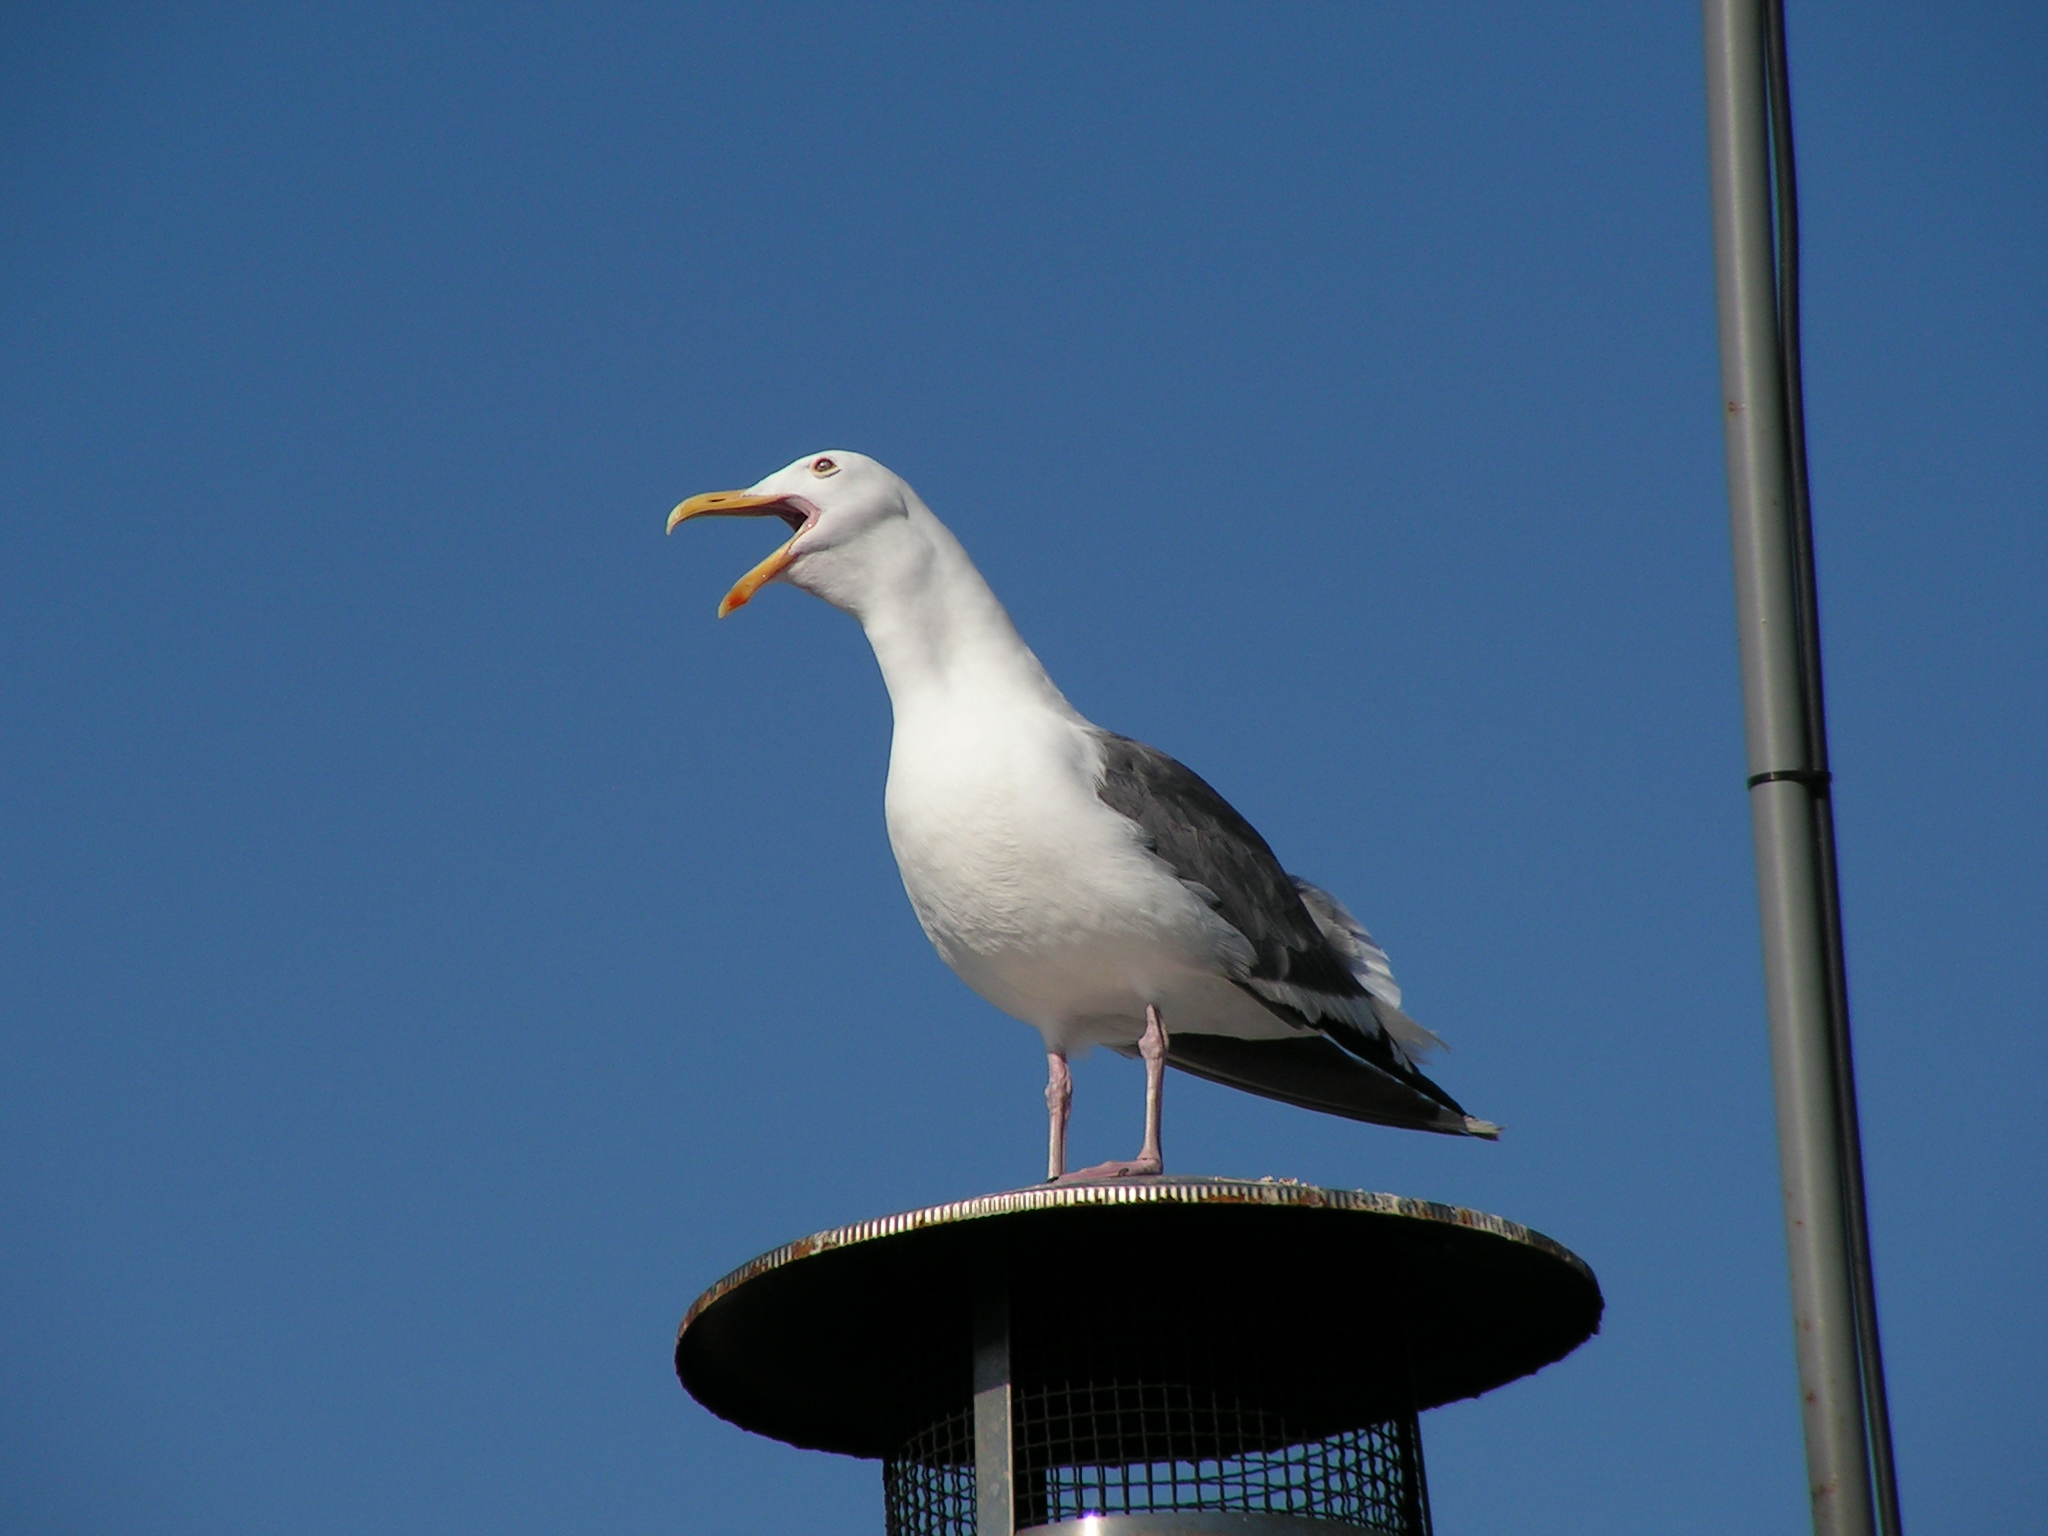 File:Standing seagull.jpg - Wikimedia Commons